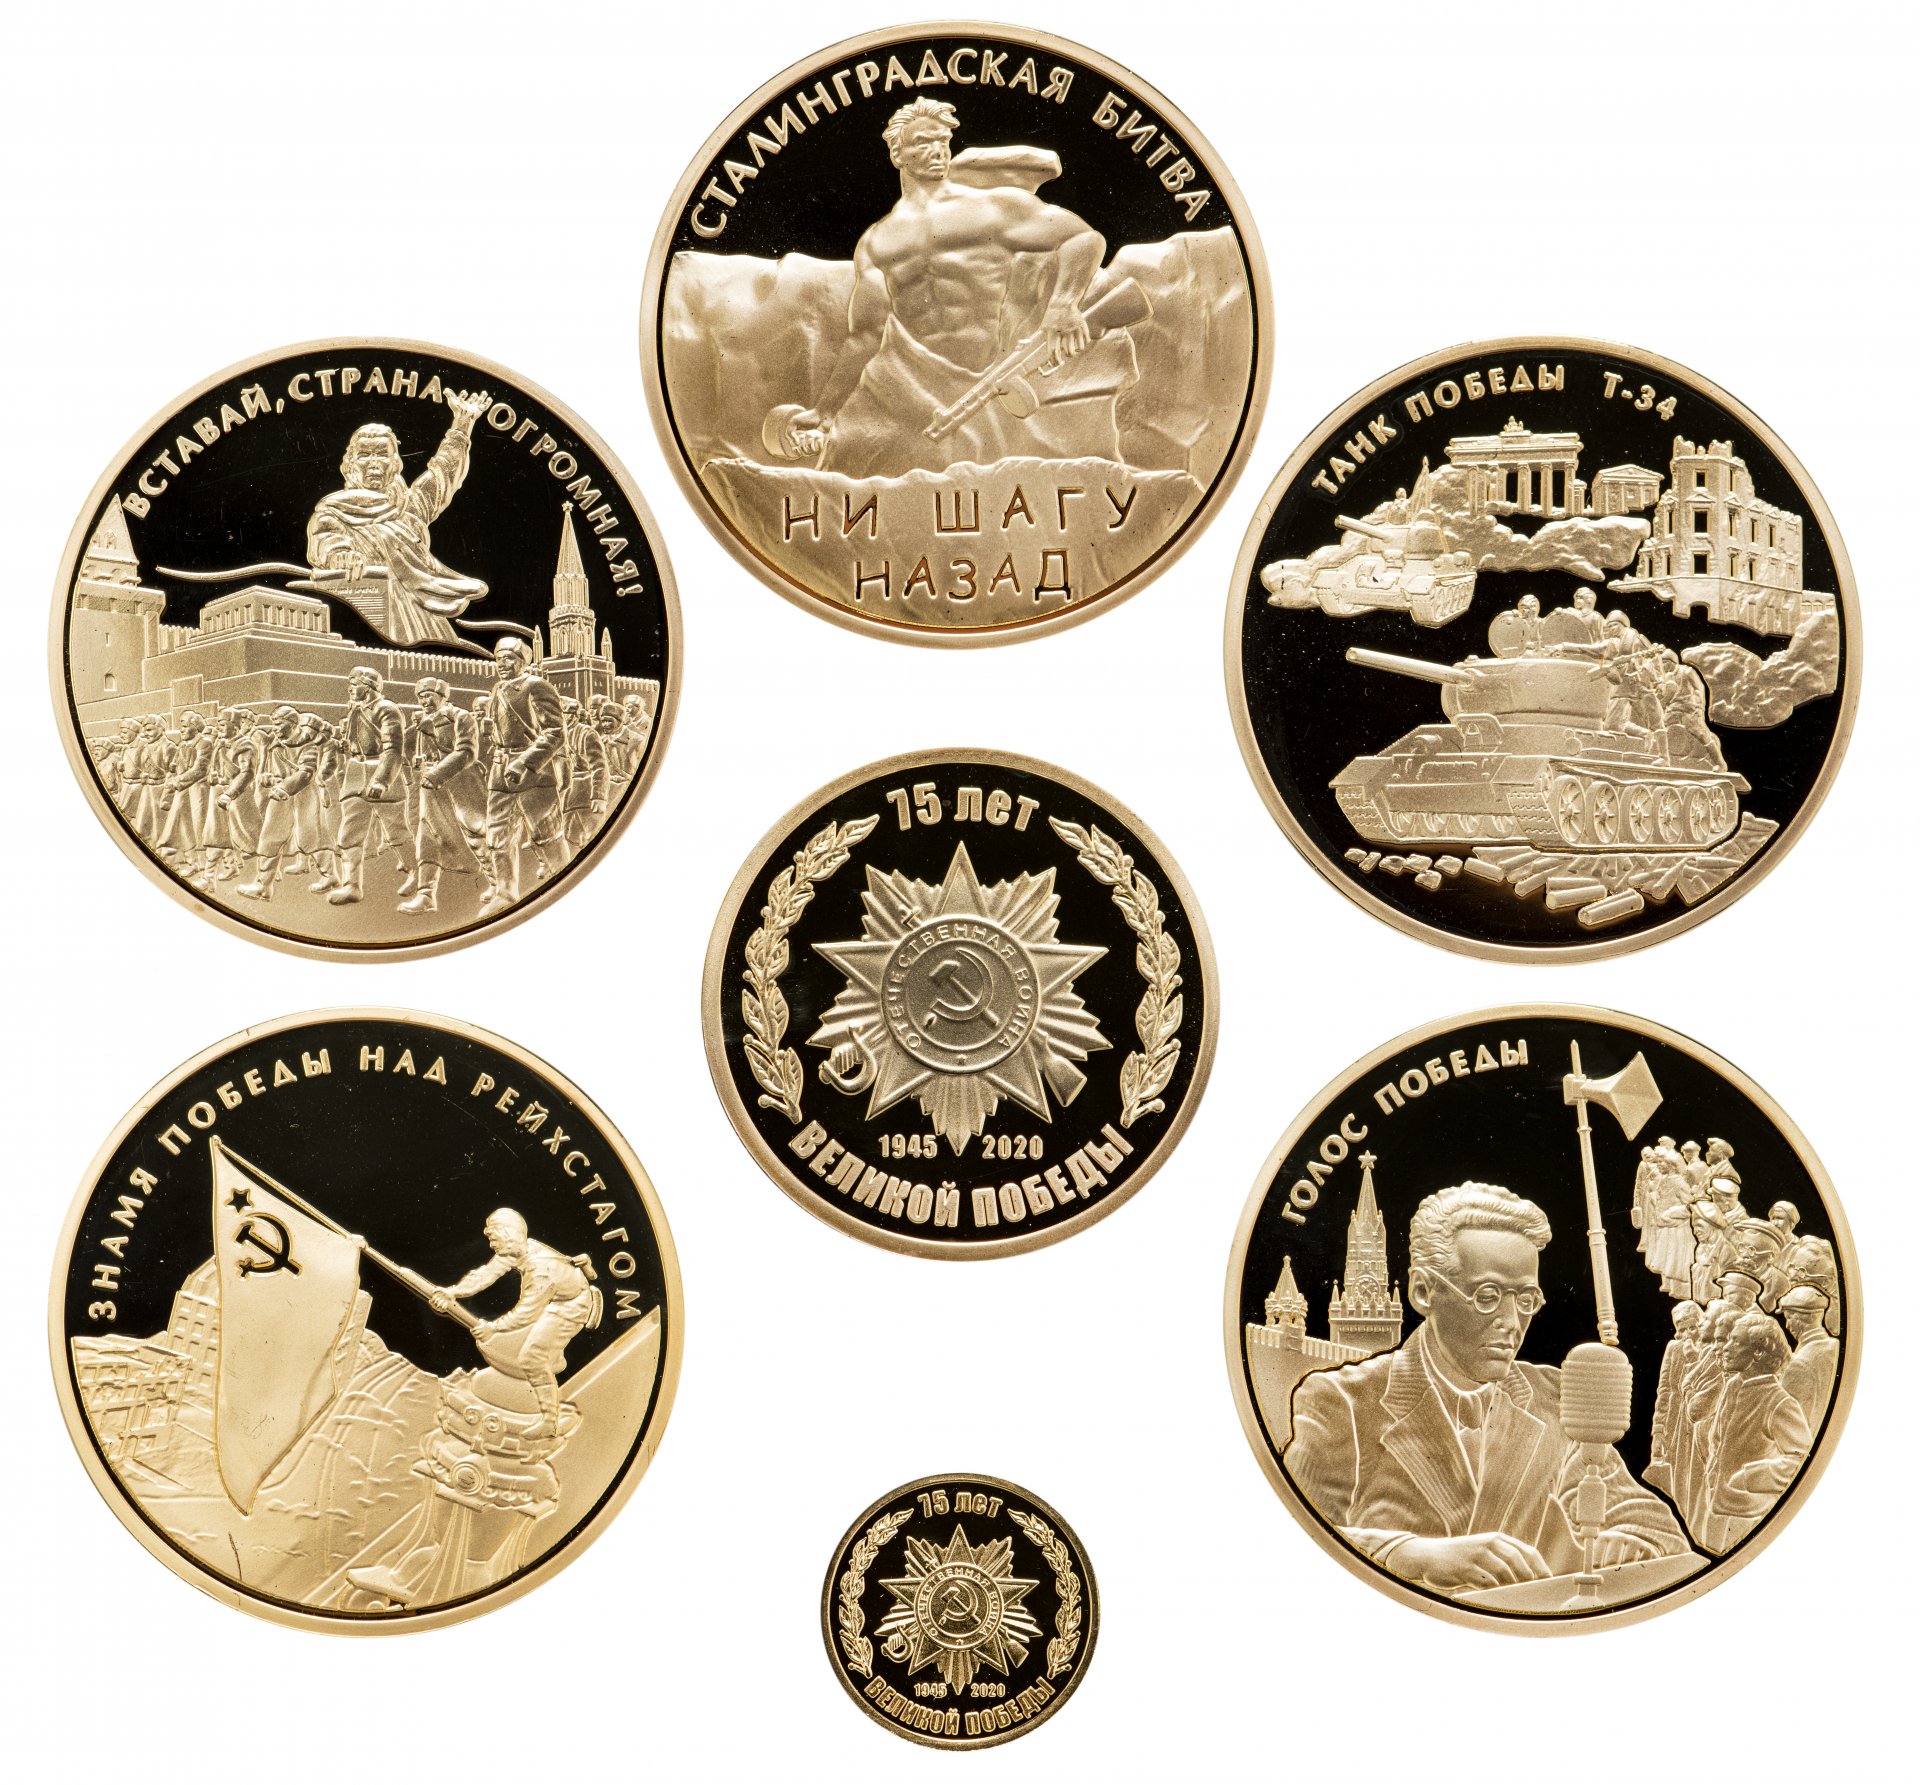 Легендарные монеты